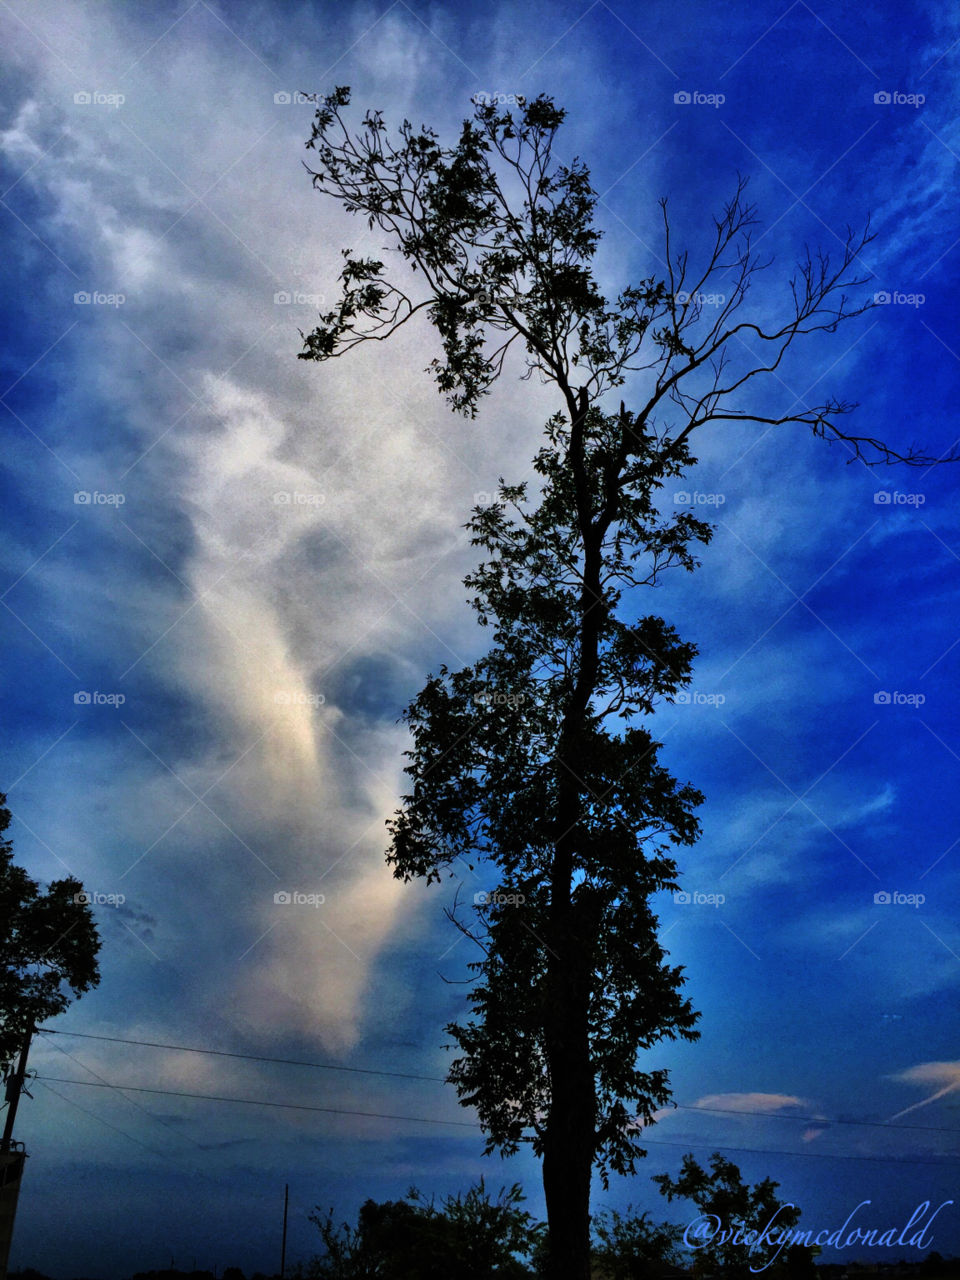 Dramatic sky and tree